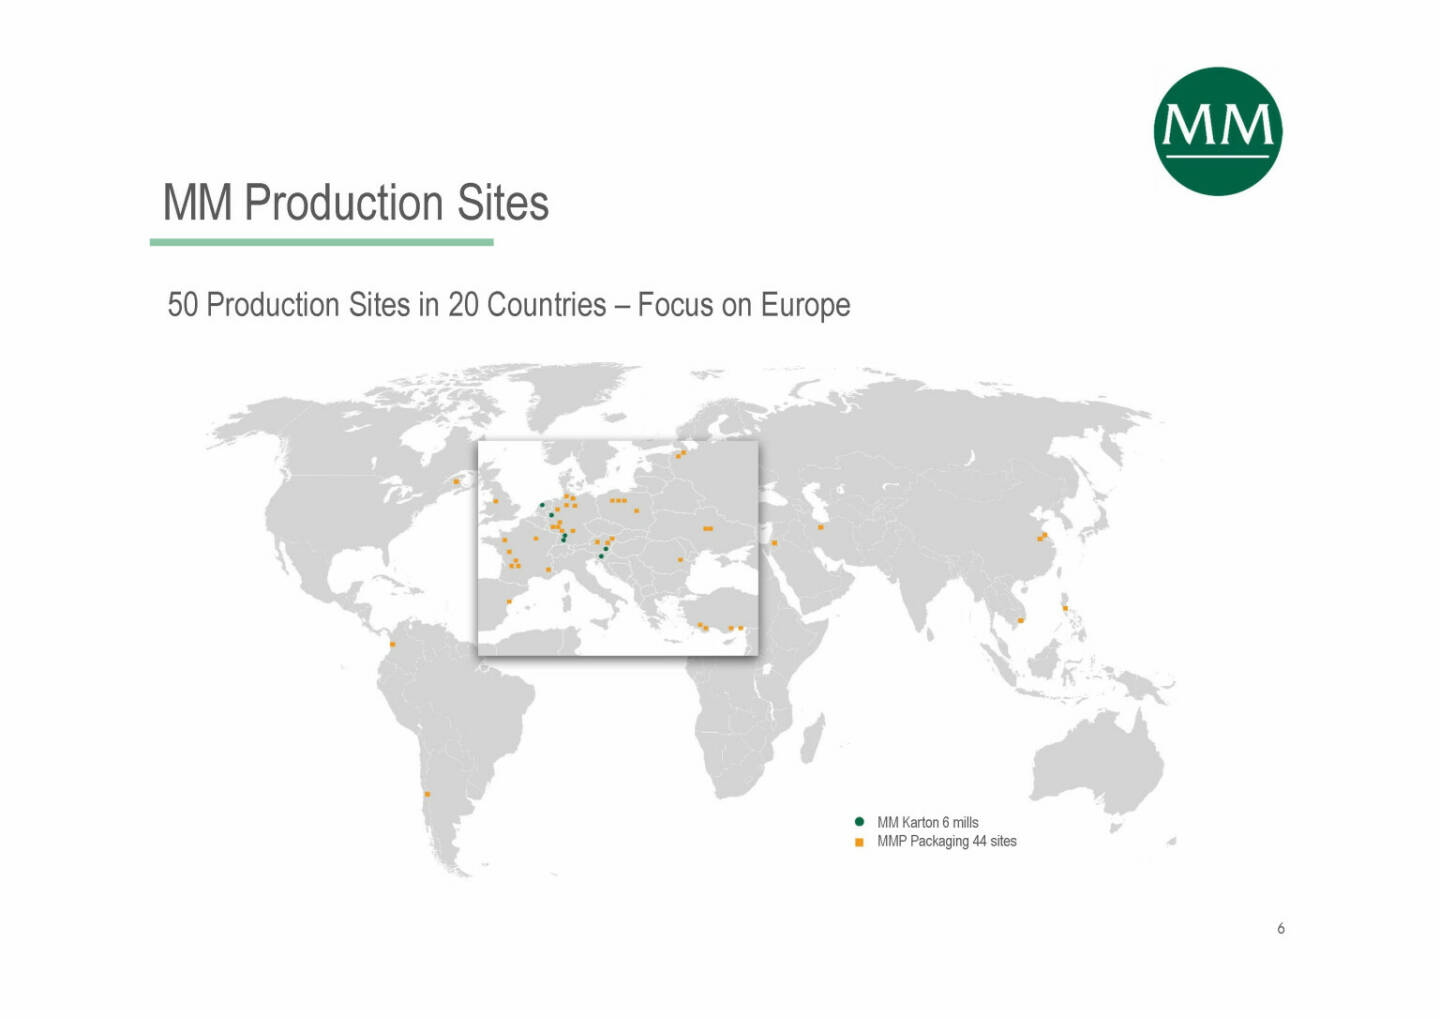 Mayr-Melnhof - Production Sites